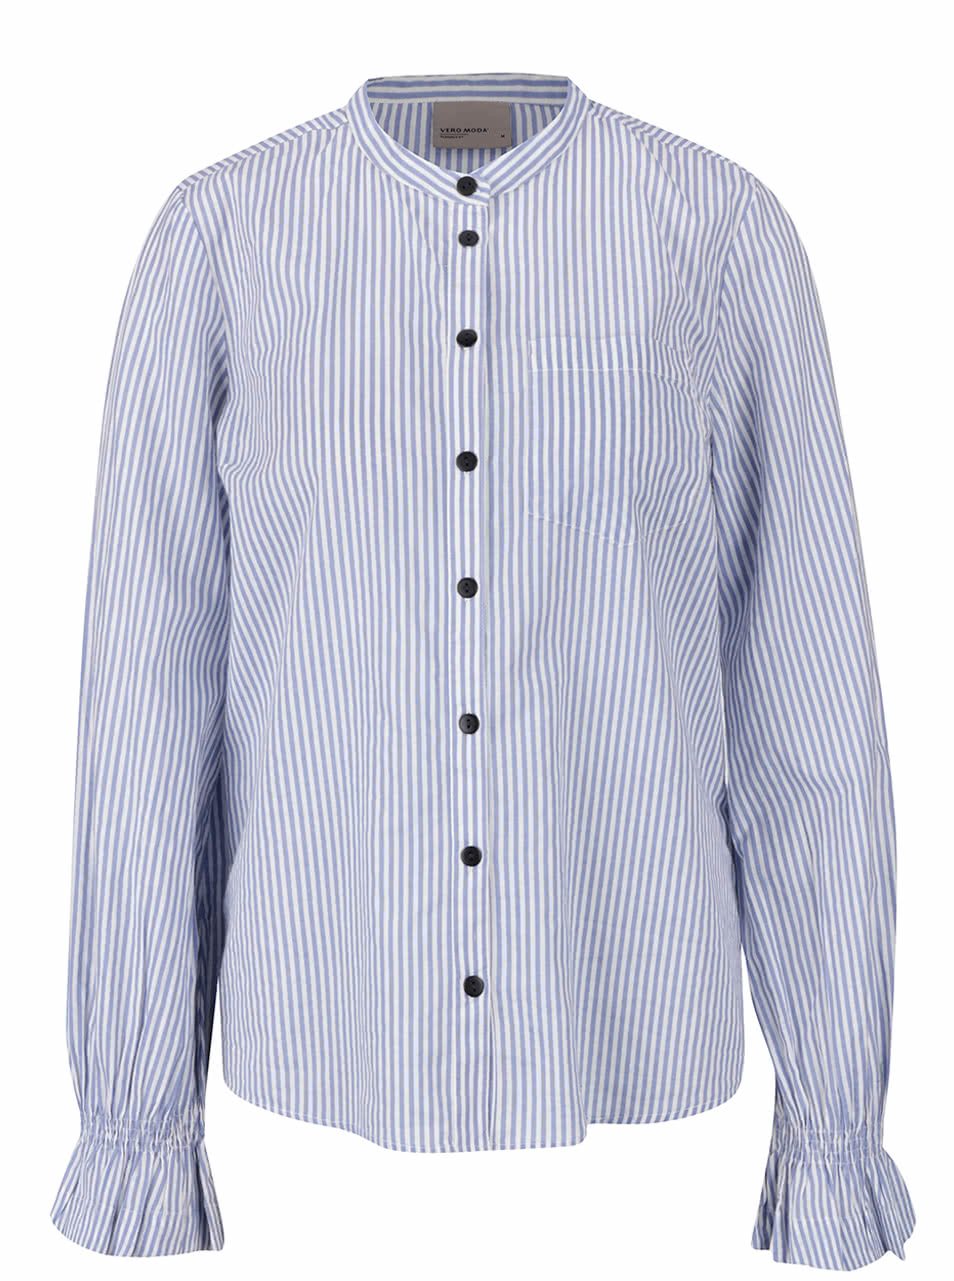 Bílo-modrá pruhovaná košile s nařasenými rukávy Vero Moda Saki